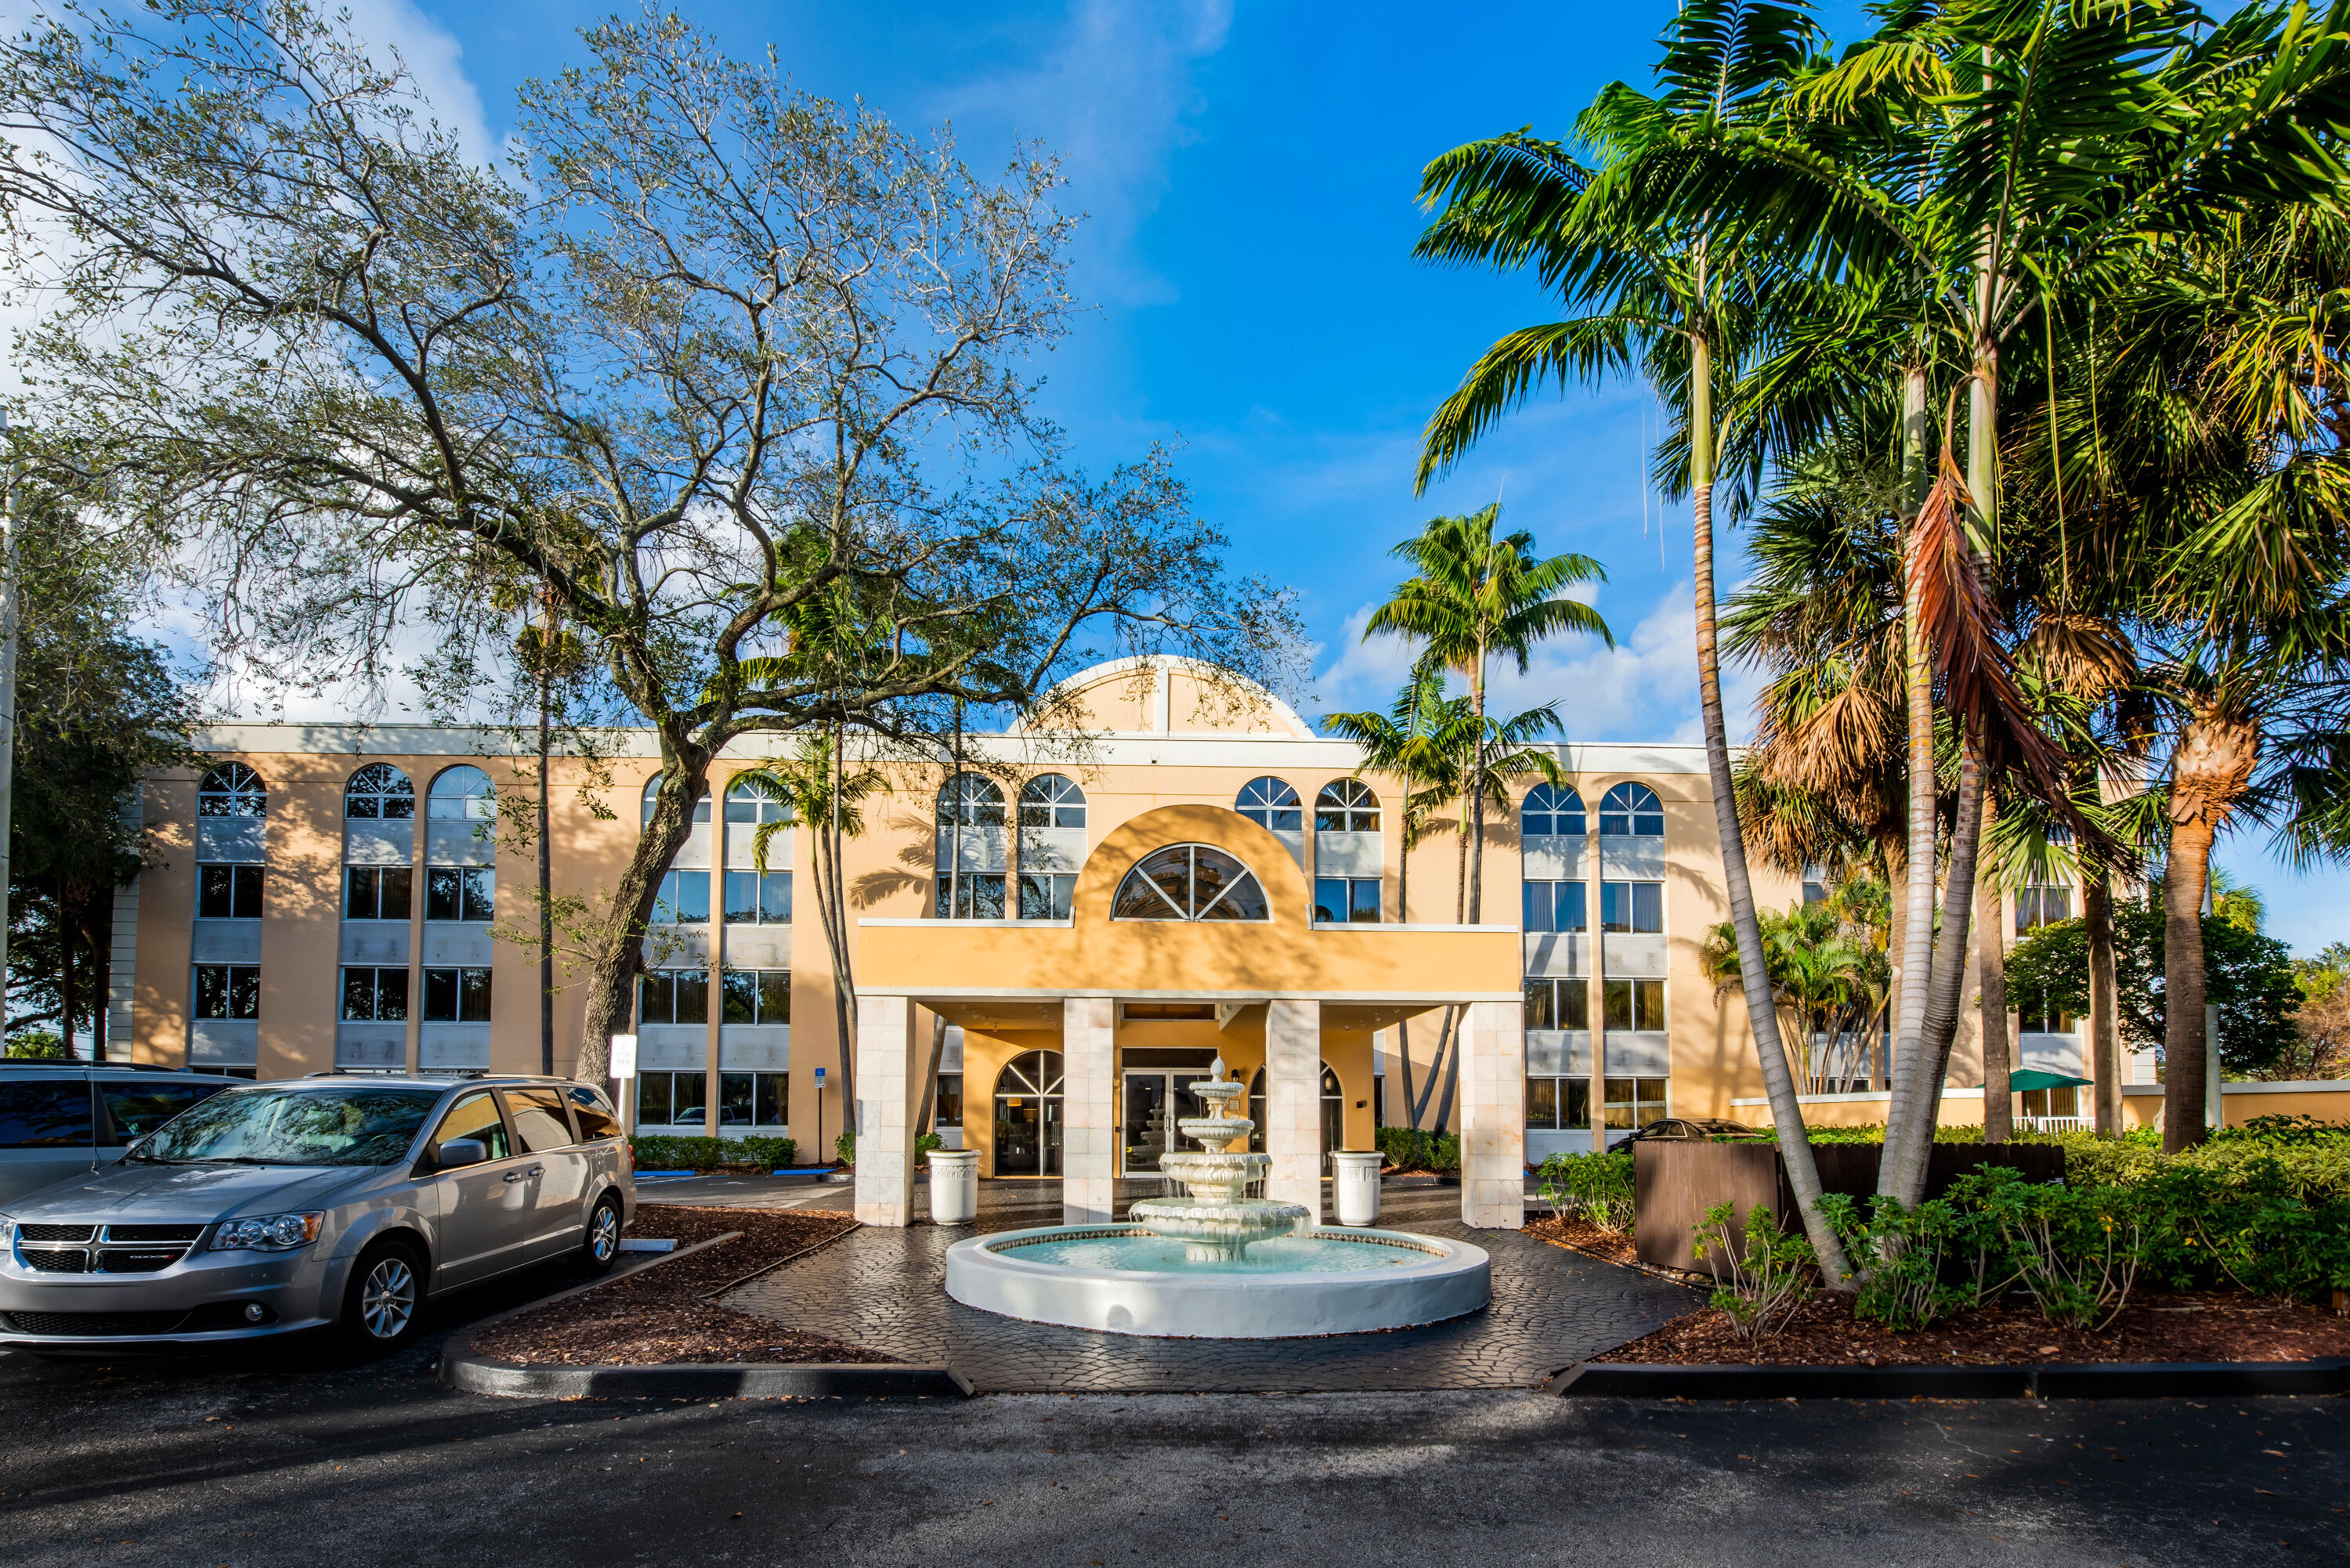 La Quinta Inn And Suites By Wyndham Fort Lauderdale Tamarac Hoteles En Fort Lauderdale Fl 33319